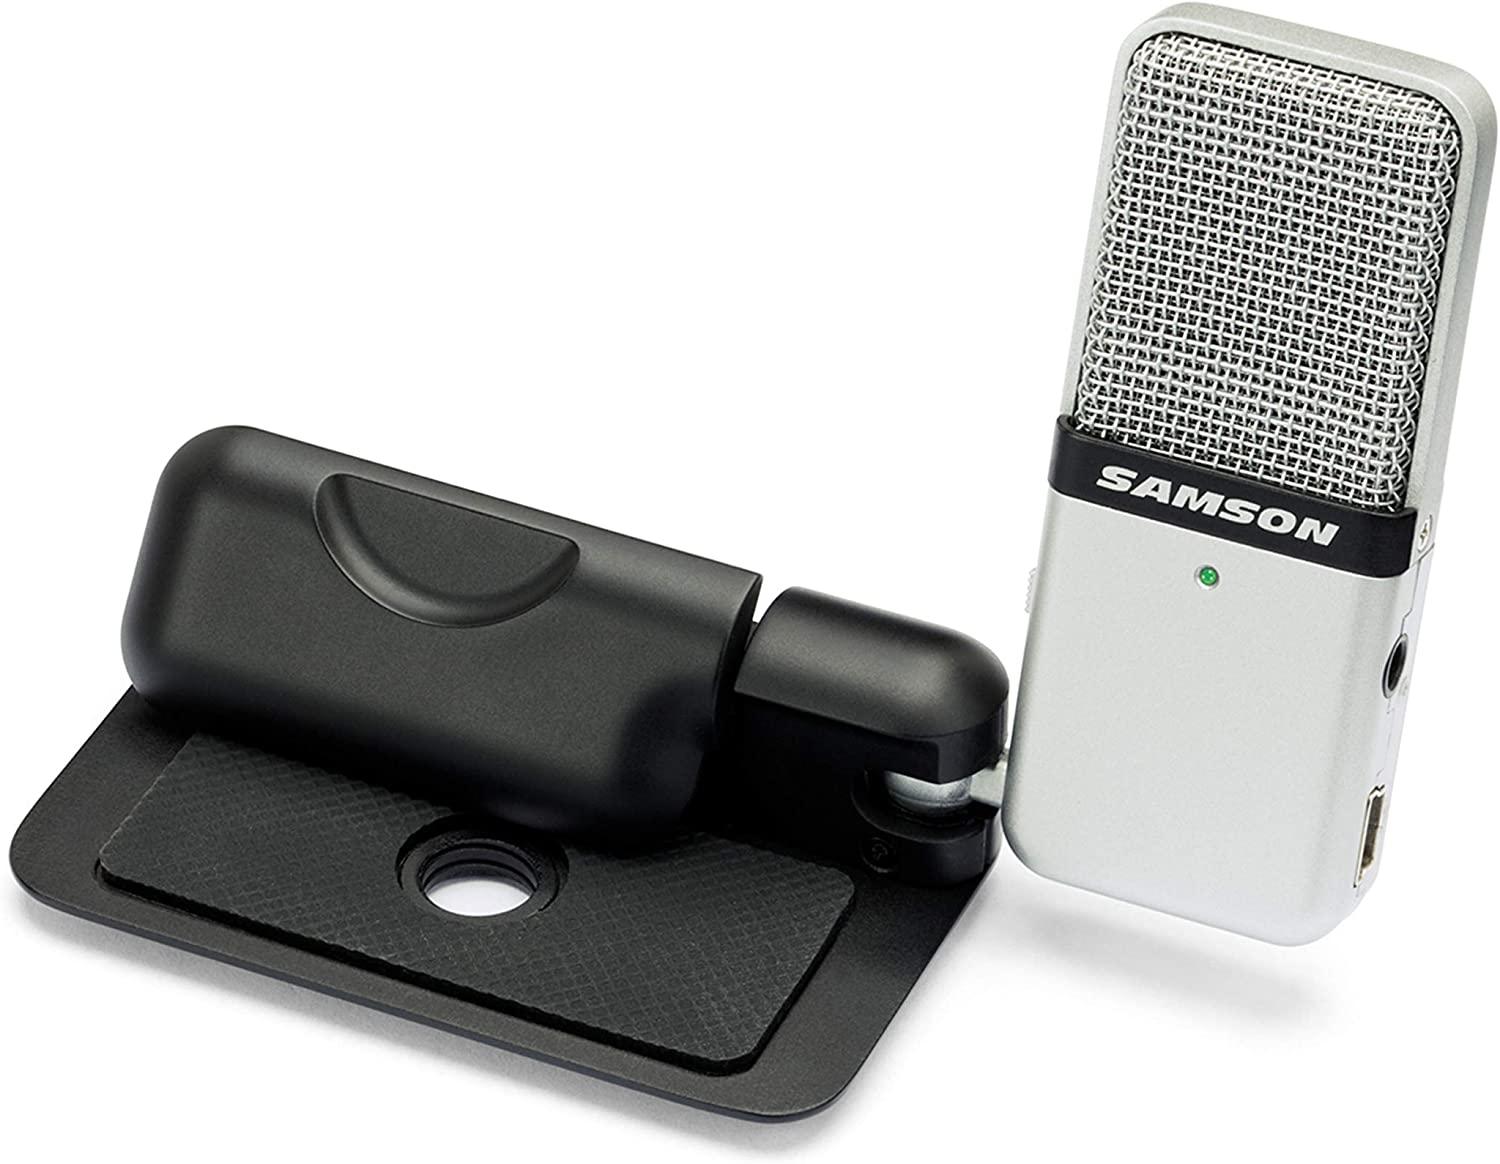 Samson Sagomic Go Mic Portable USB Condenser Microphone for $19.99